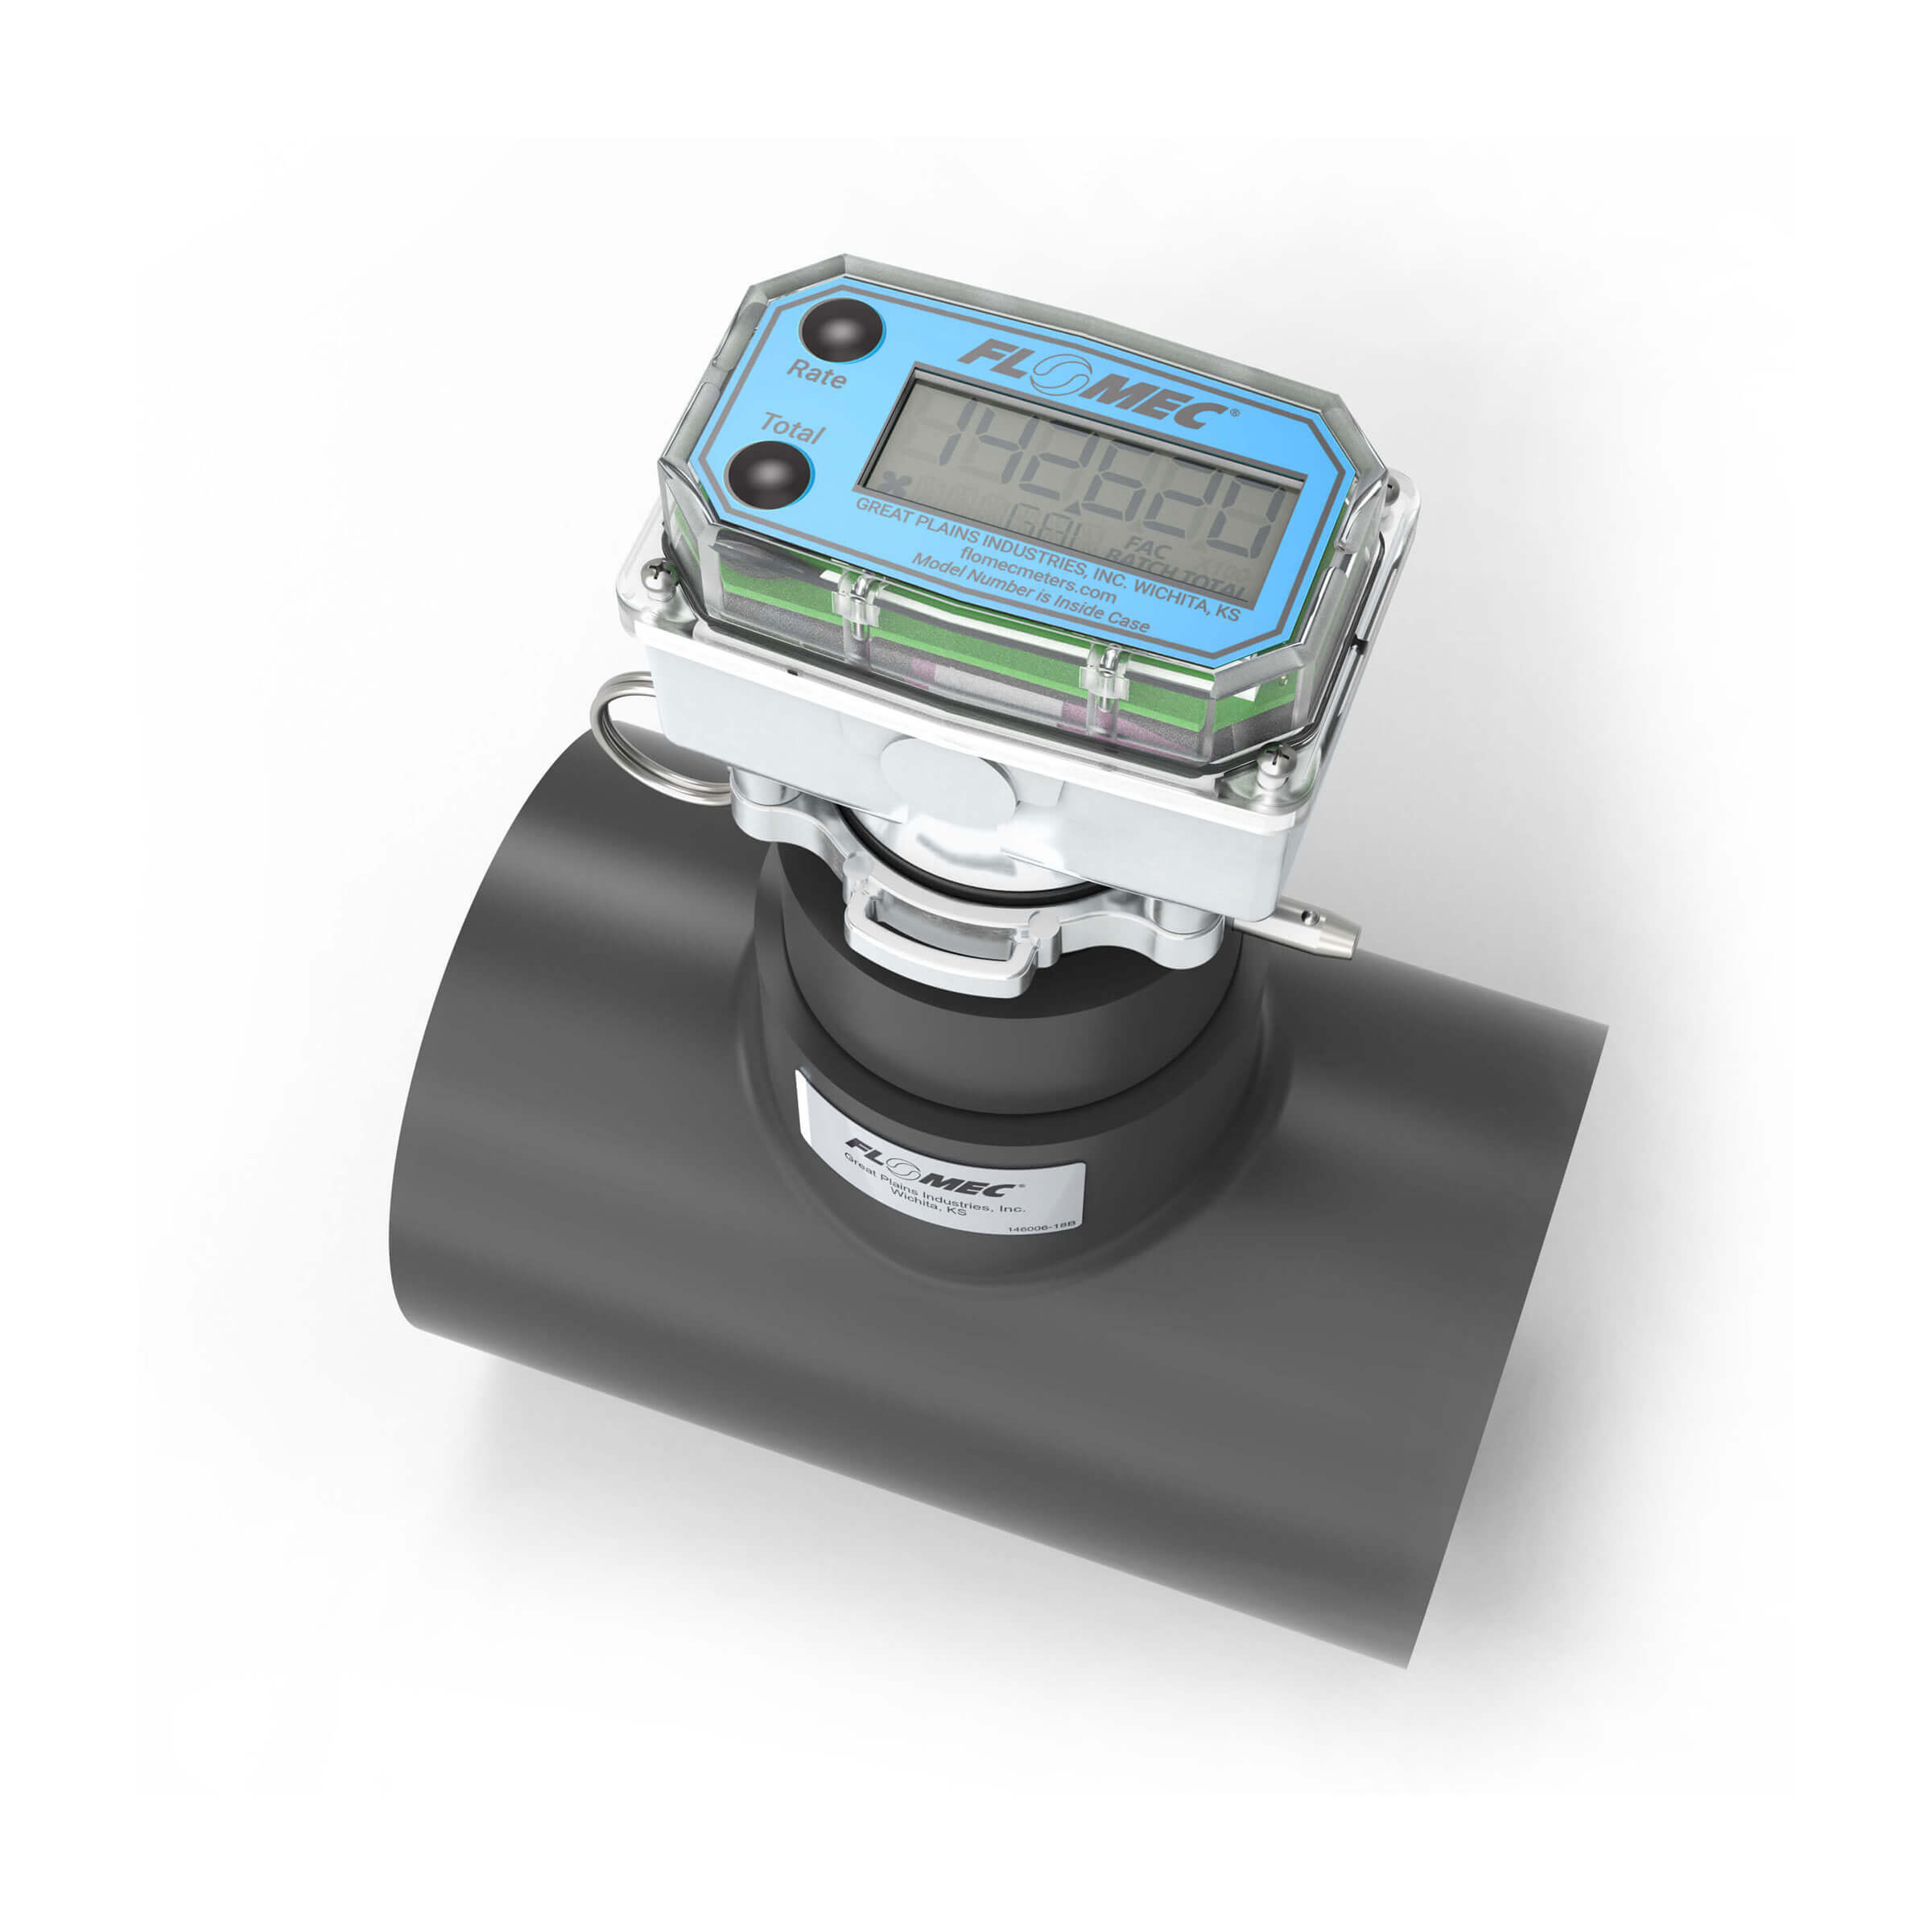 Ultrasonic Flow Meter, Battery Powered Display, Schedule 80 PVC Tee for Water